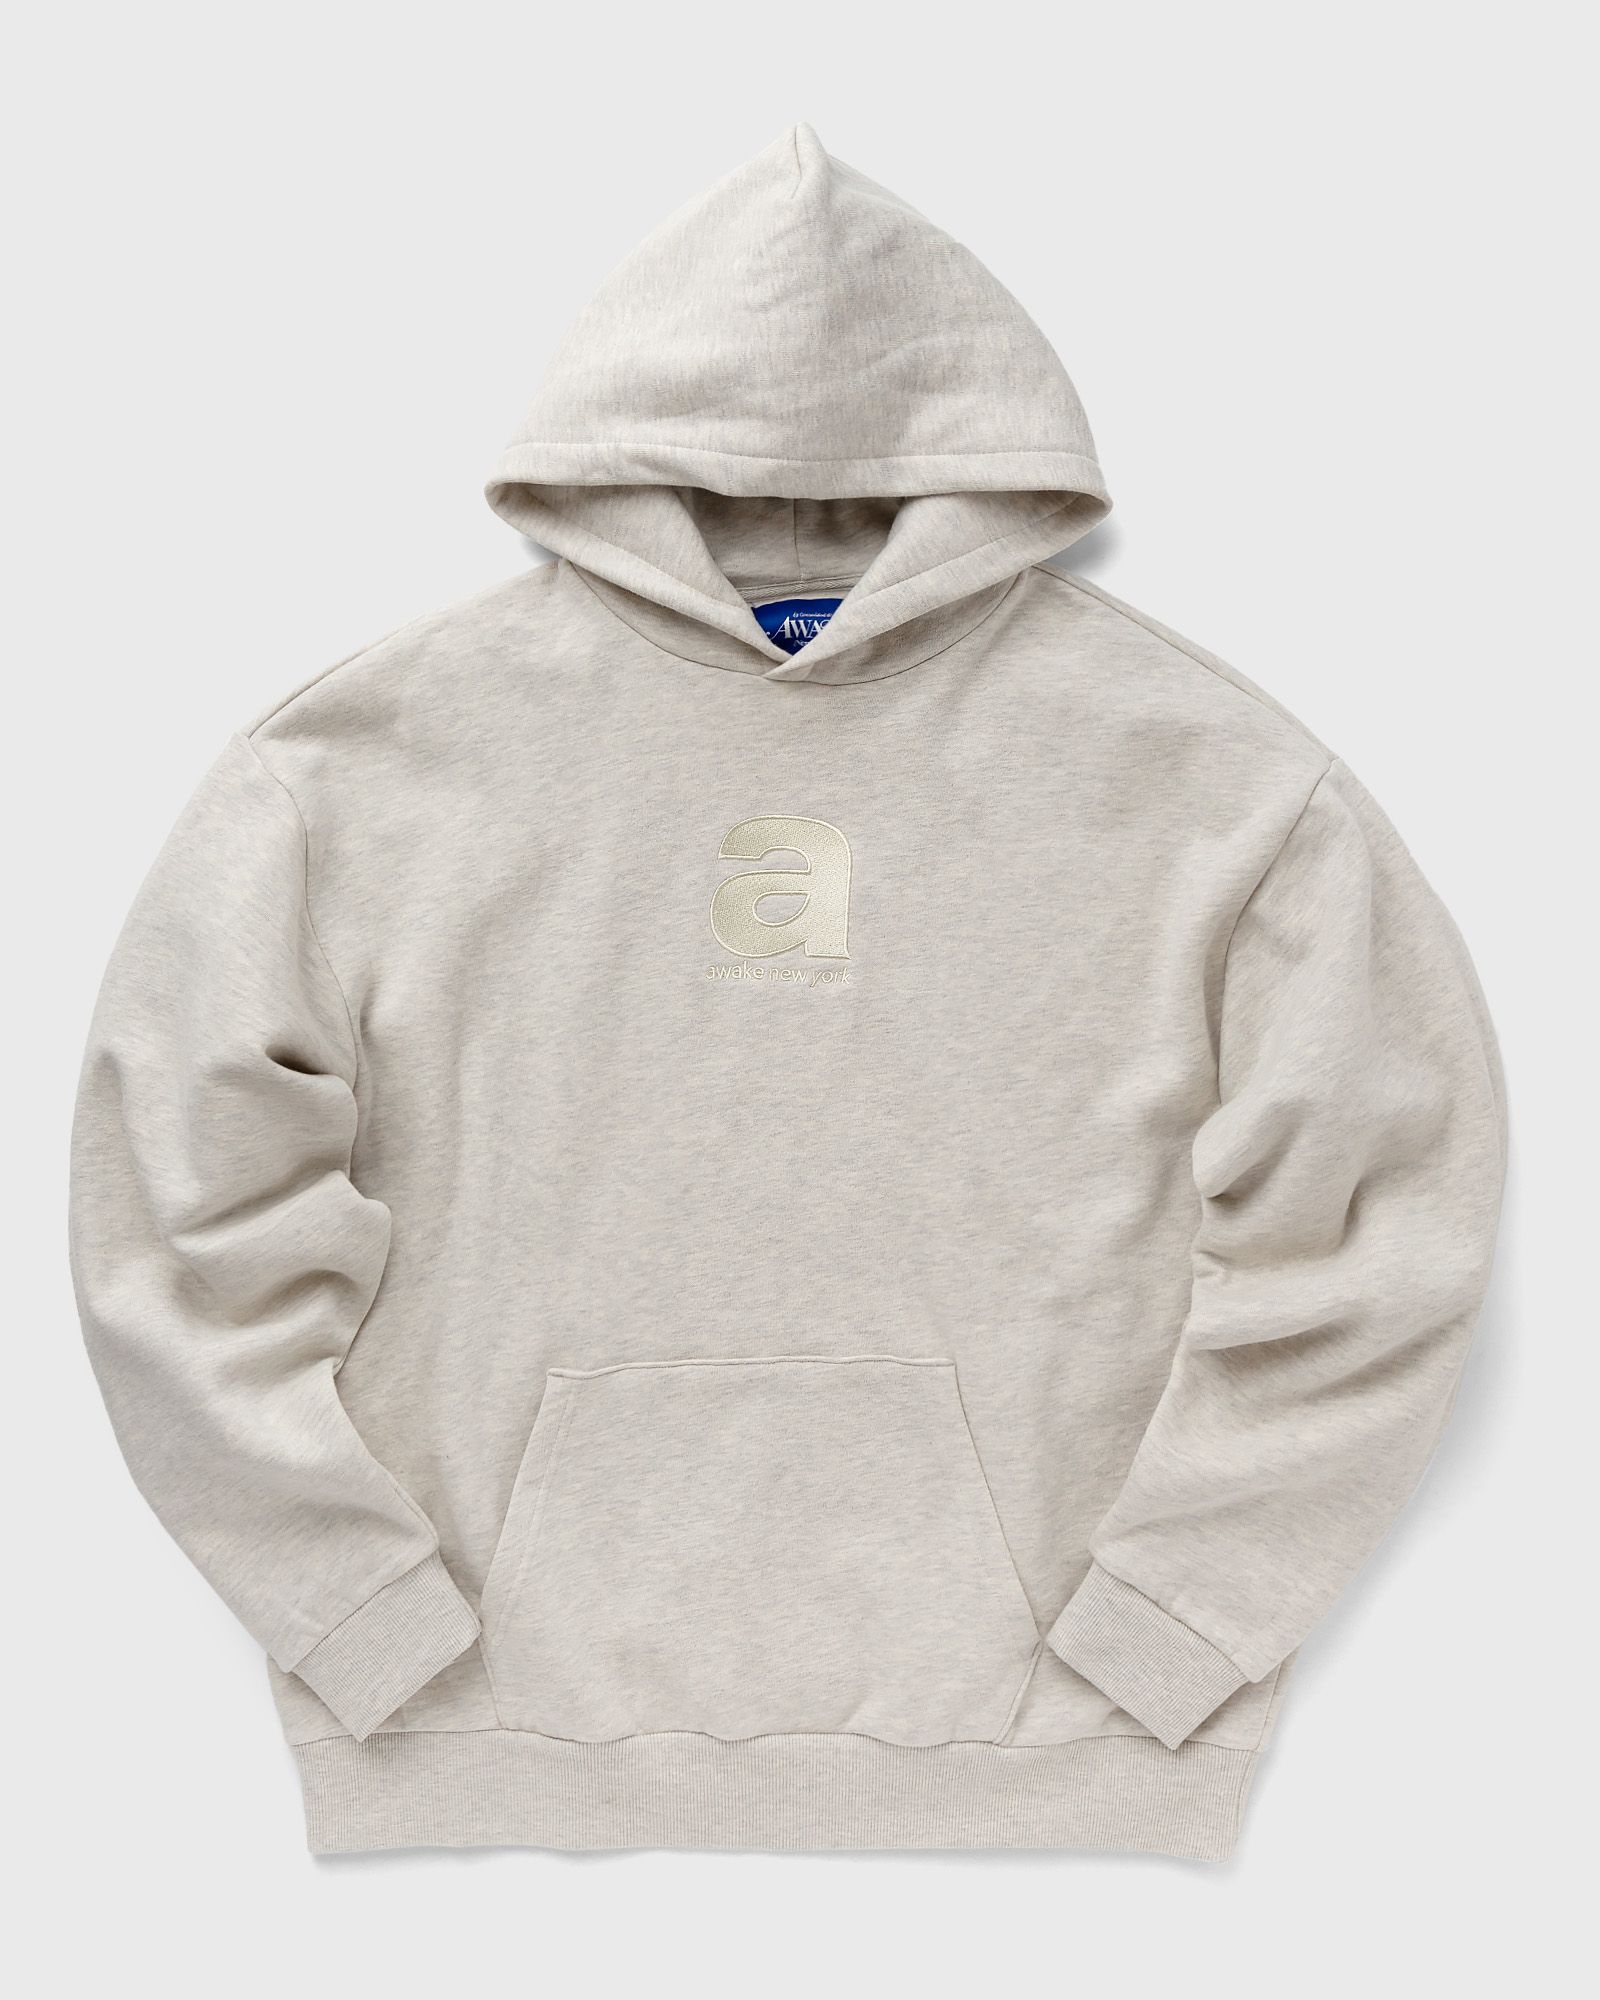 Awake - bold hoodie men hoodies grey in größe:xxl